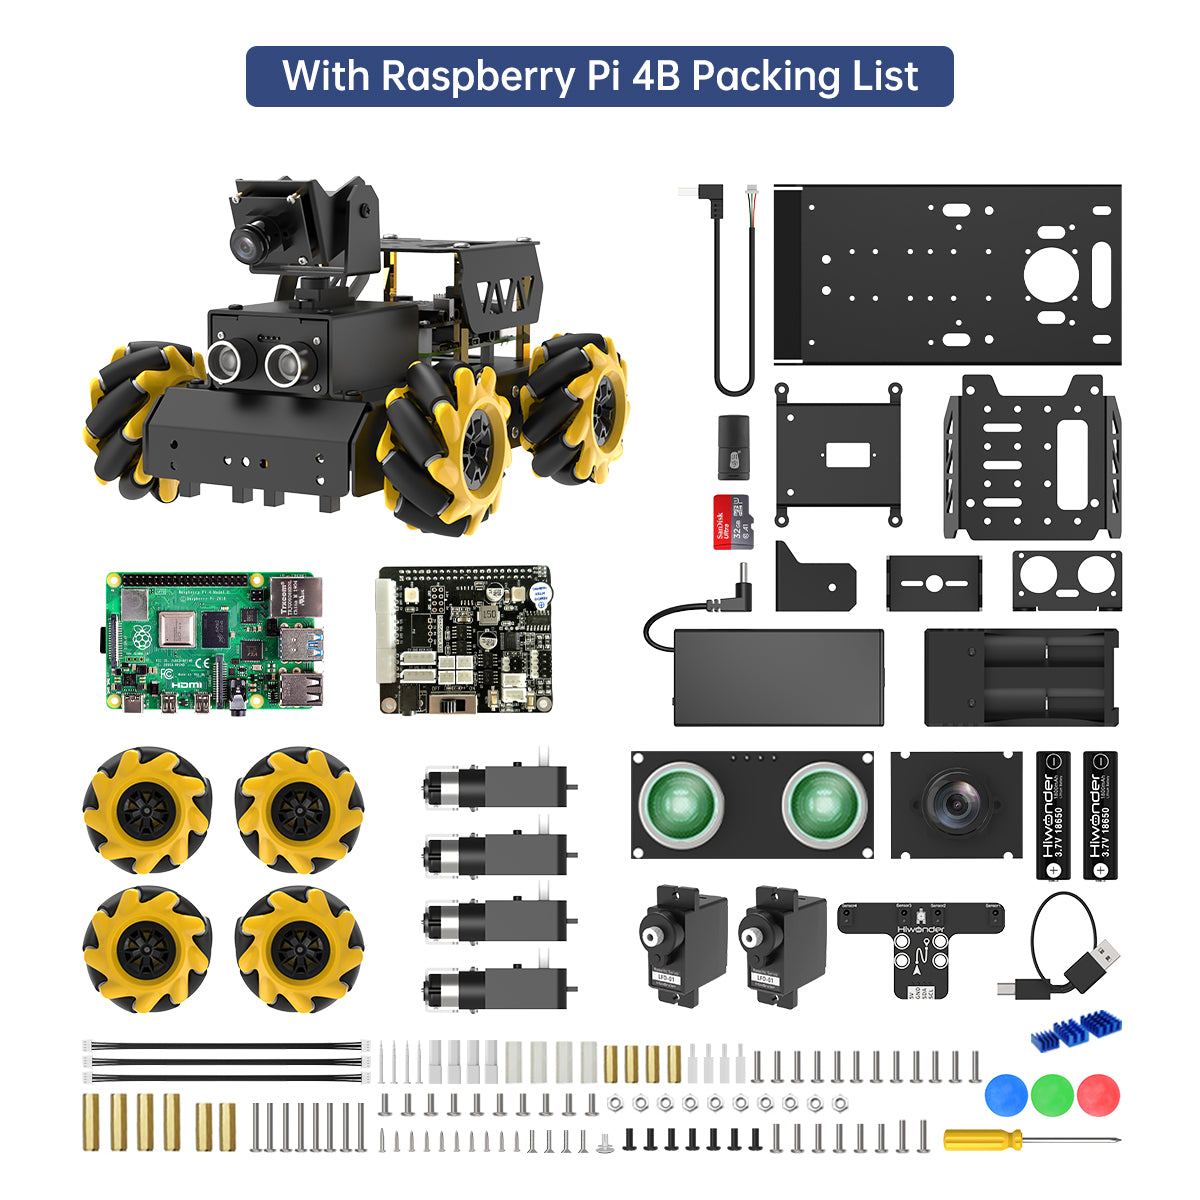 Hiwonder TurboPi Raspberry Pi 5 Omnidirectional Mecanum Wheels Robot Car Kit with Camera, Open Source, Python for Beginners